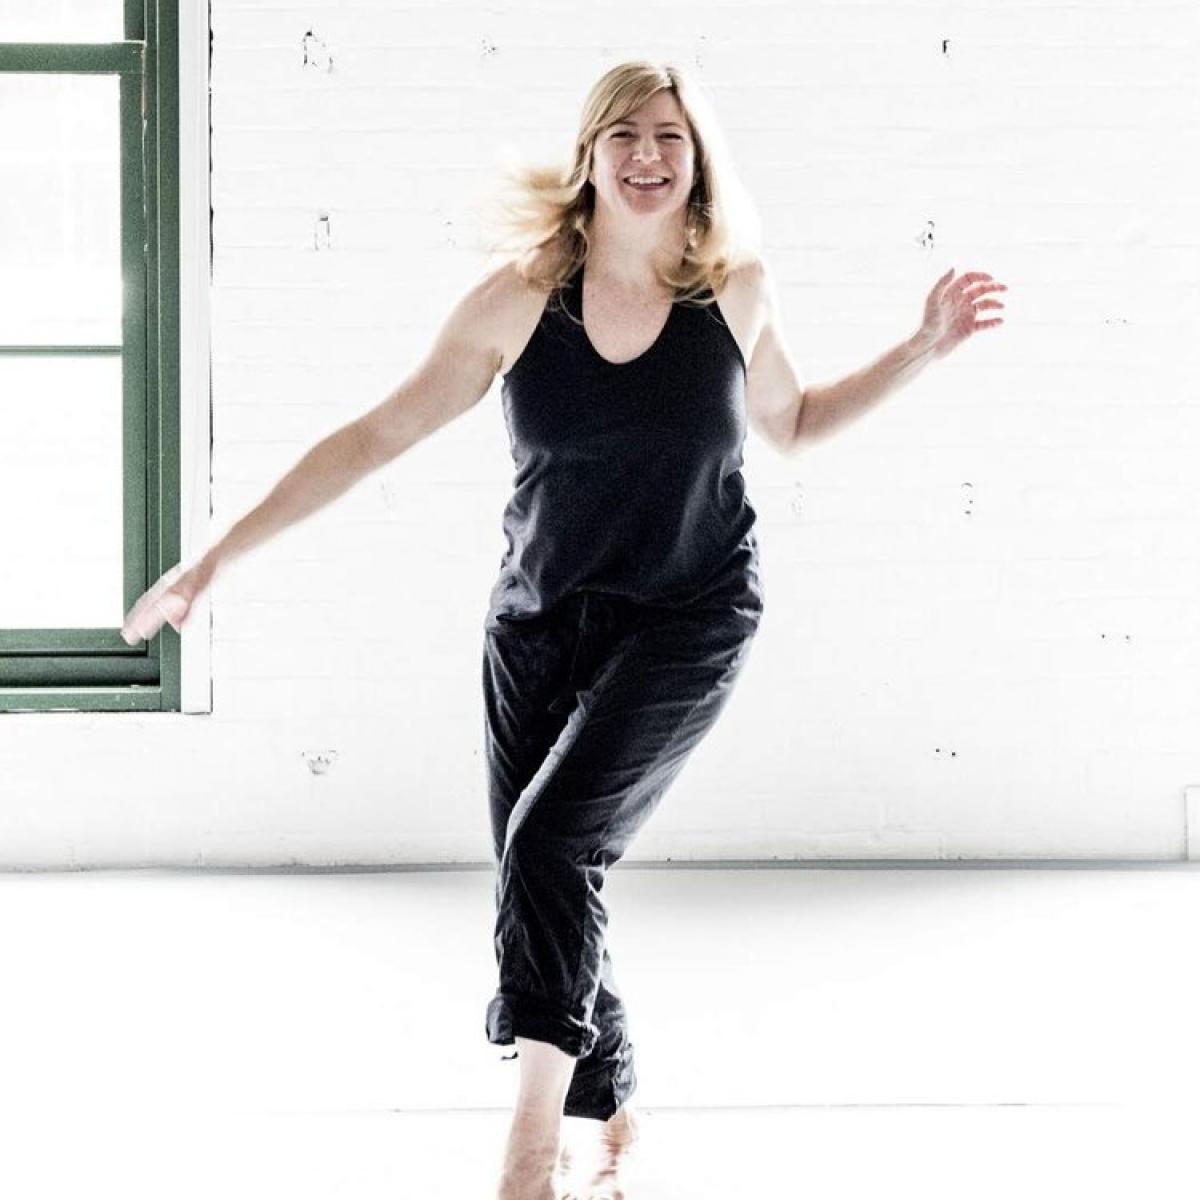 A woman in a black jumpsuit laughs and dances.